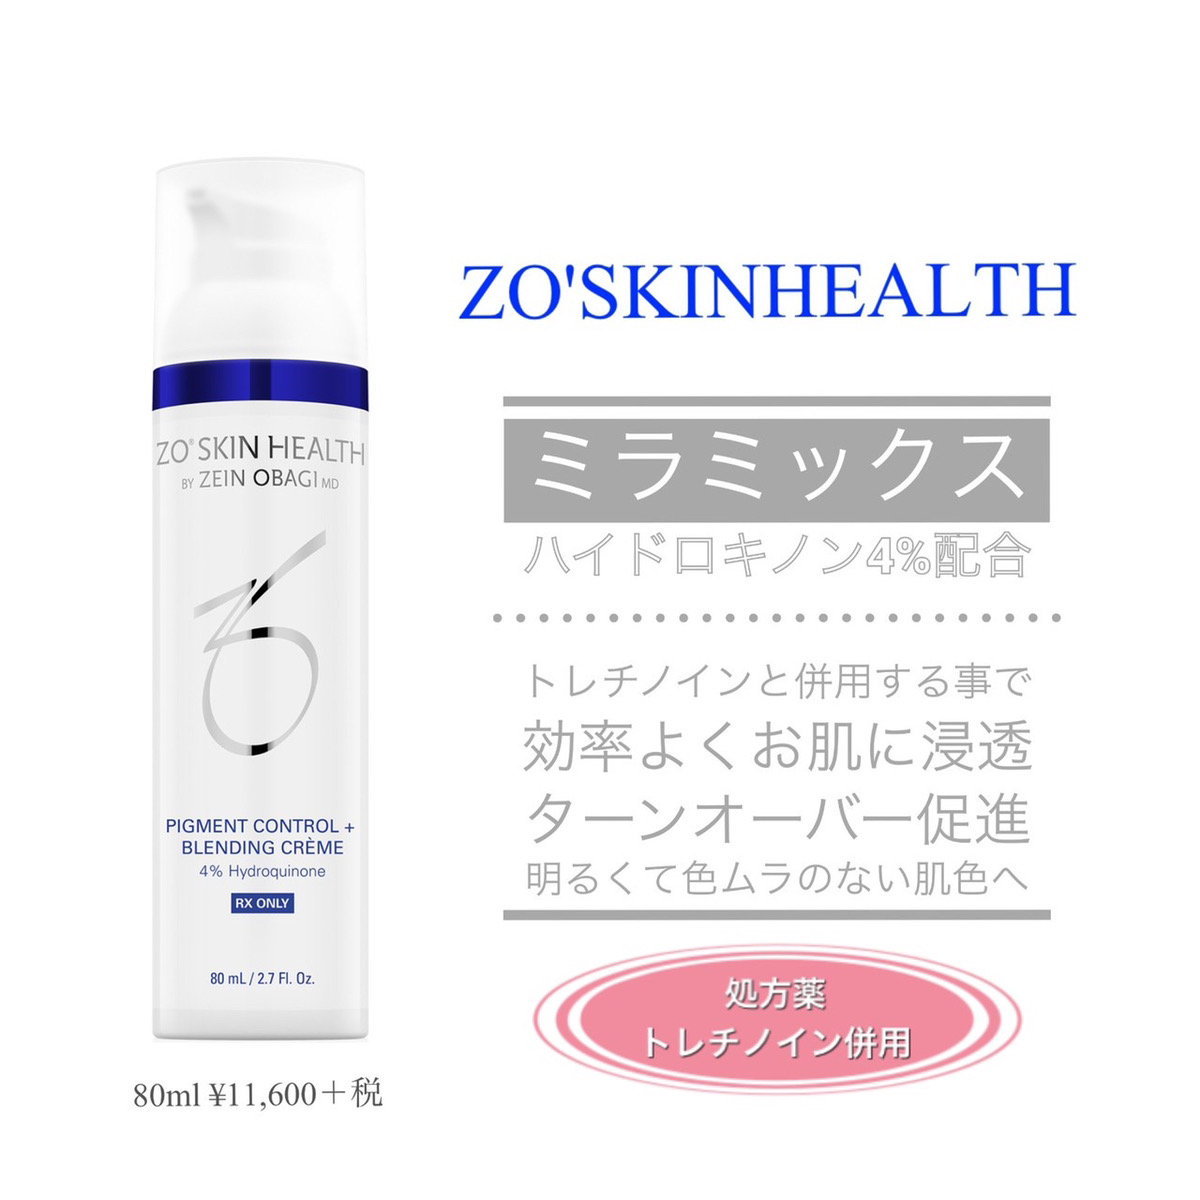 ZO Skin Health ミラミックス - rehda.com